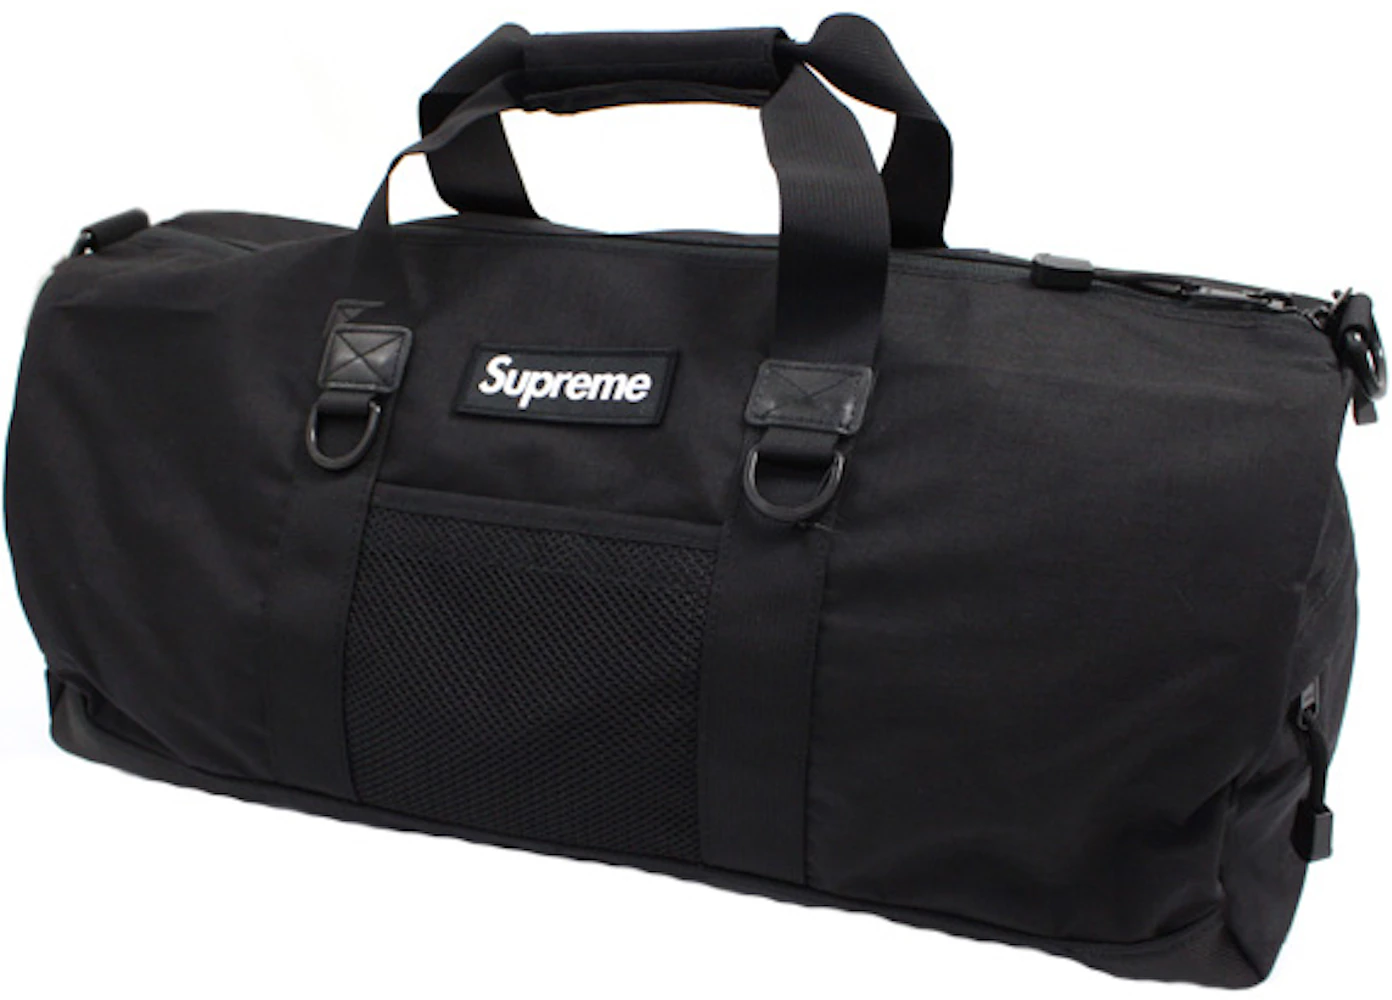 Supreme Duffle Bag Acid Green - SS17 - GB